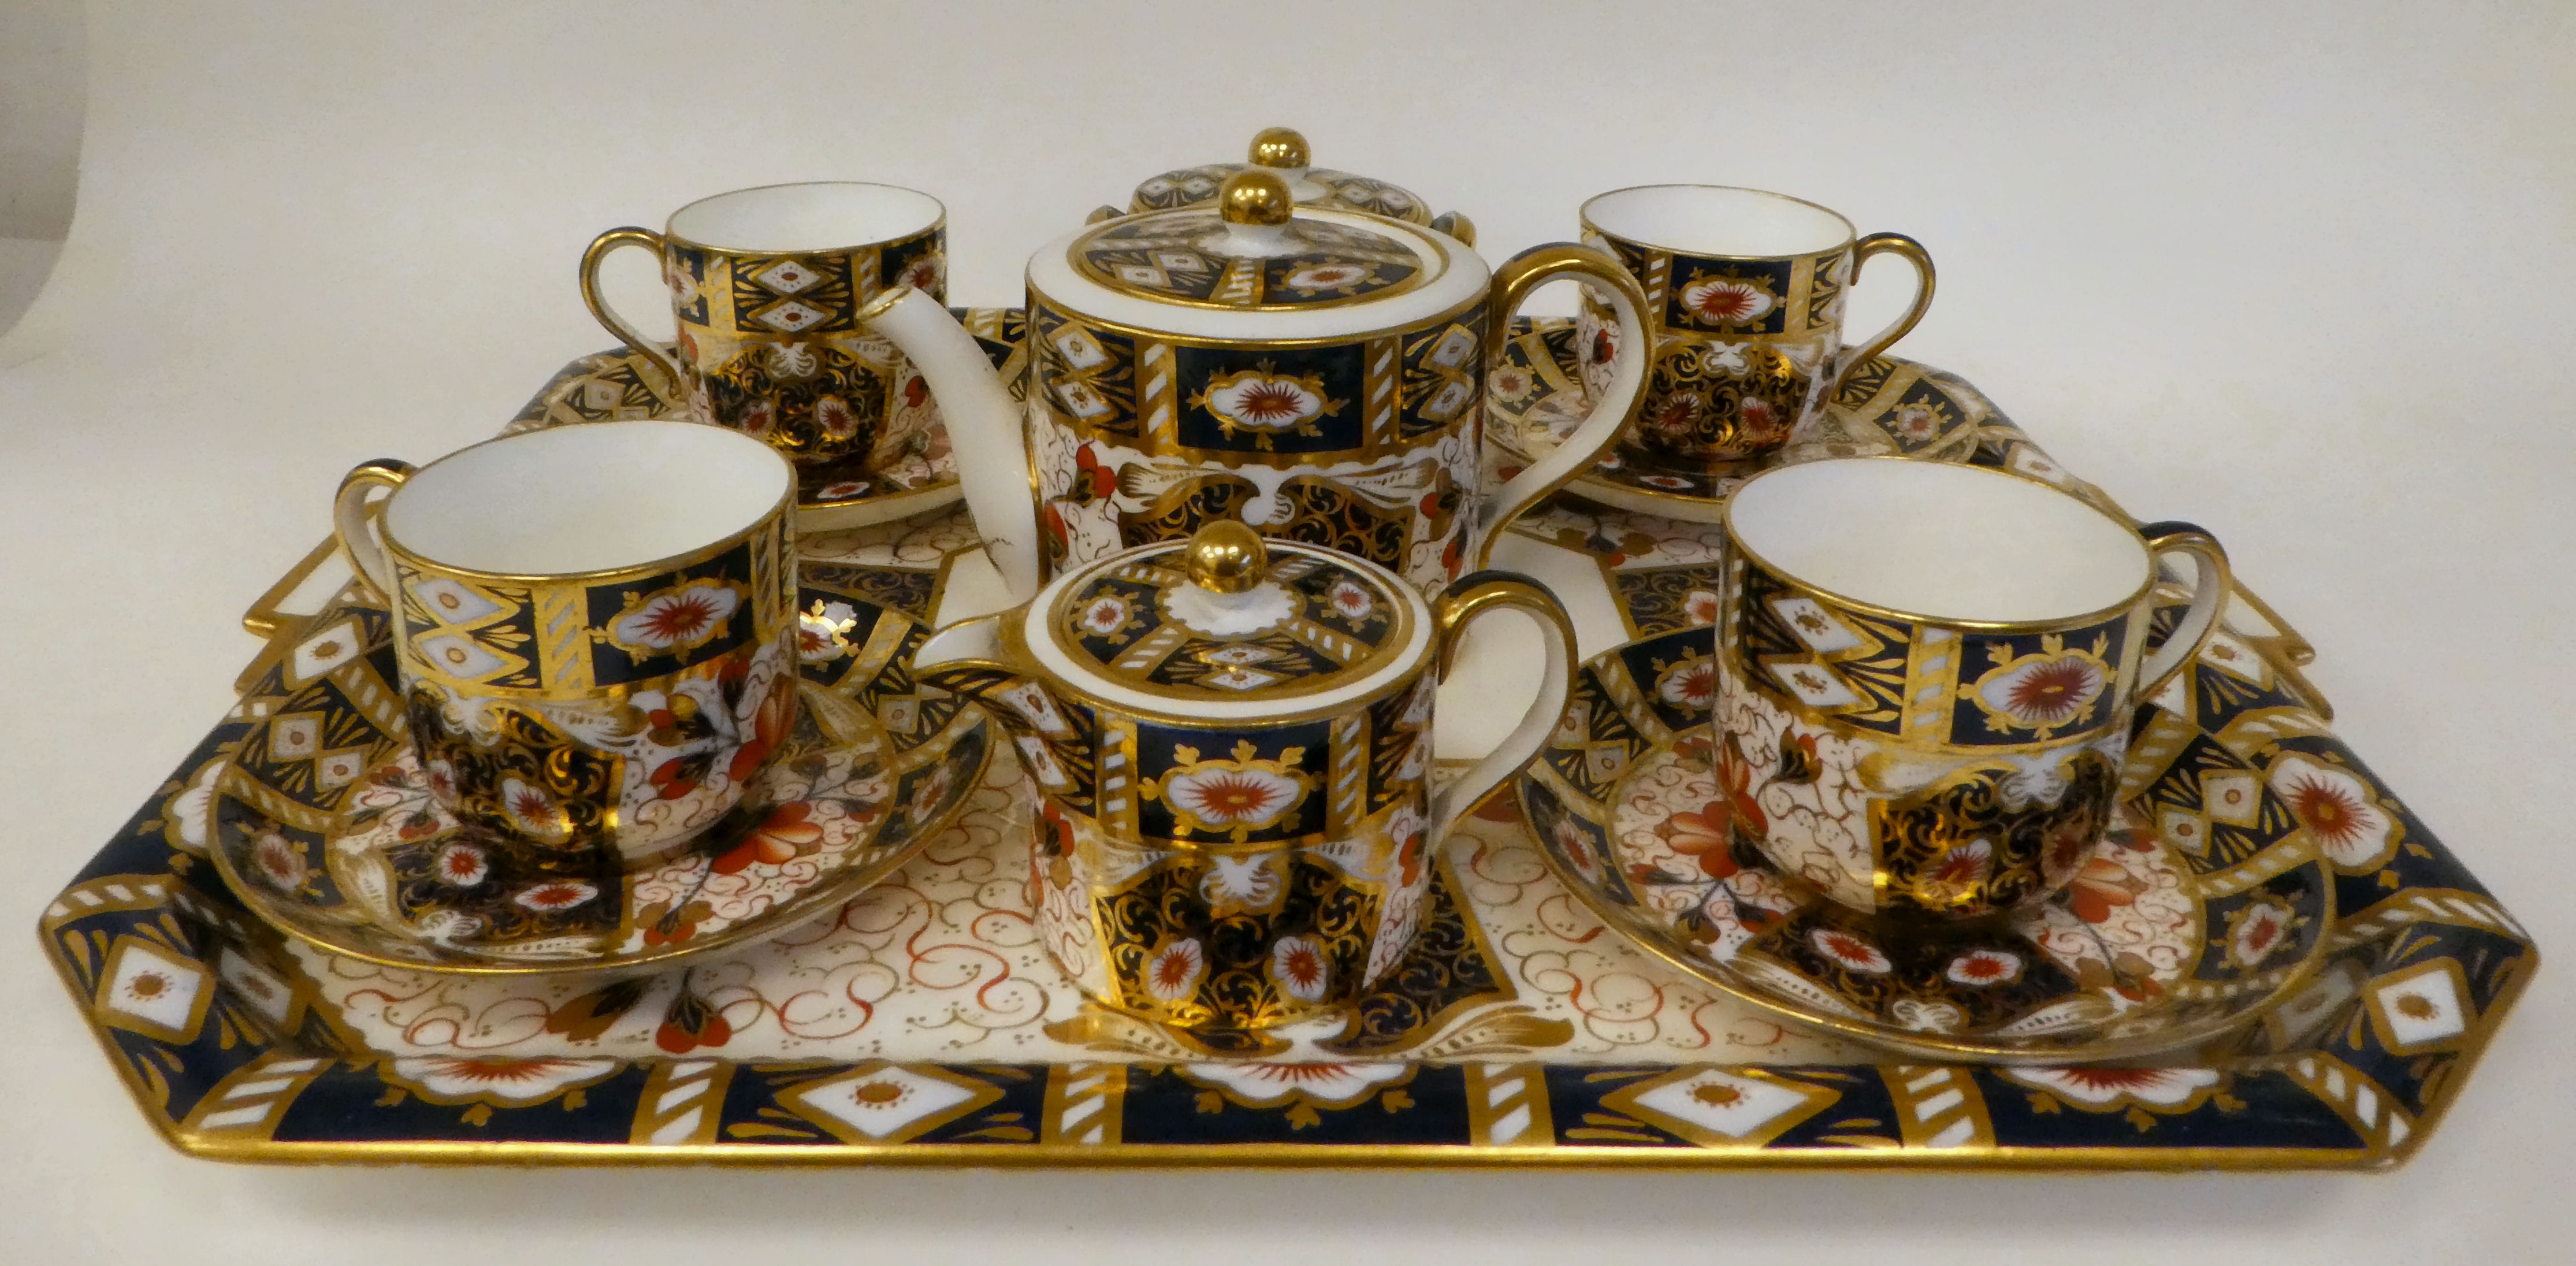 A Wedgwood china Old Imari pattern tea set  comprising a drum design teapot, twin handled sugar